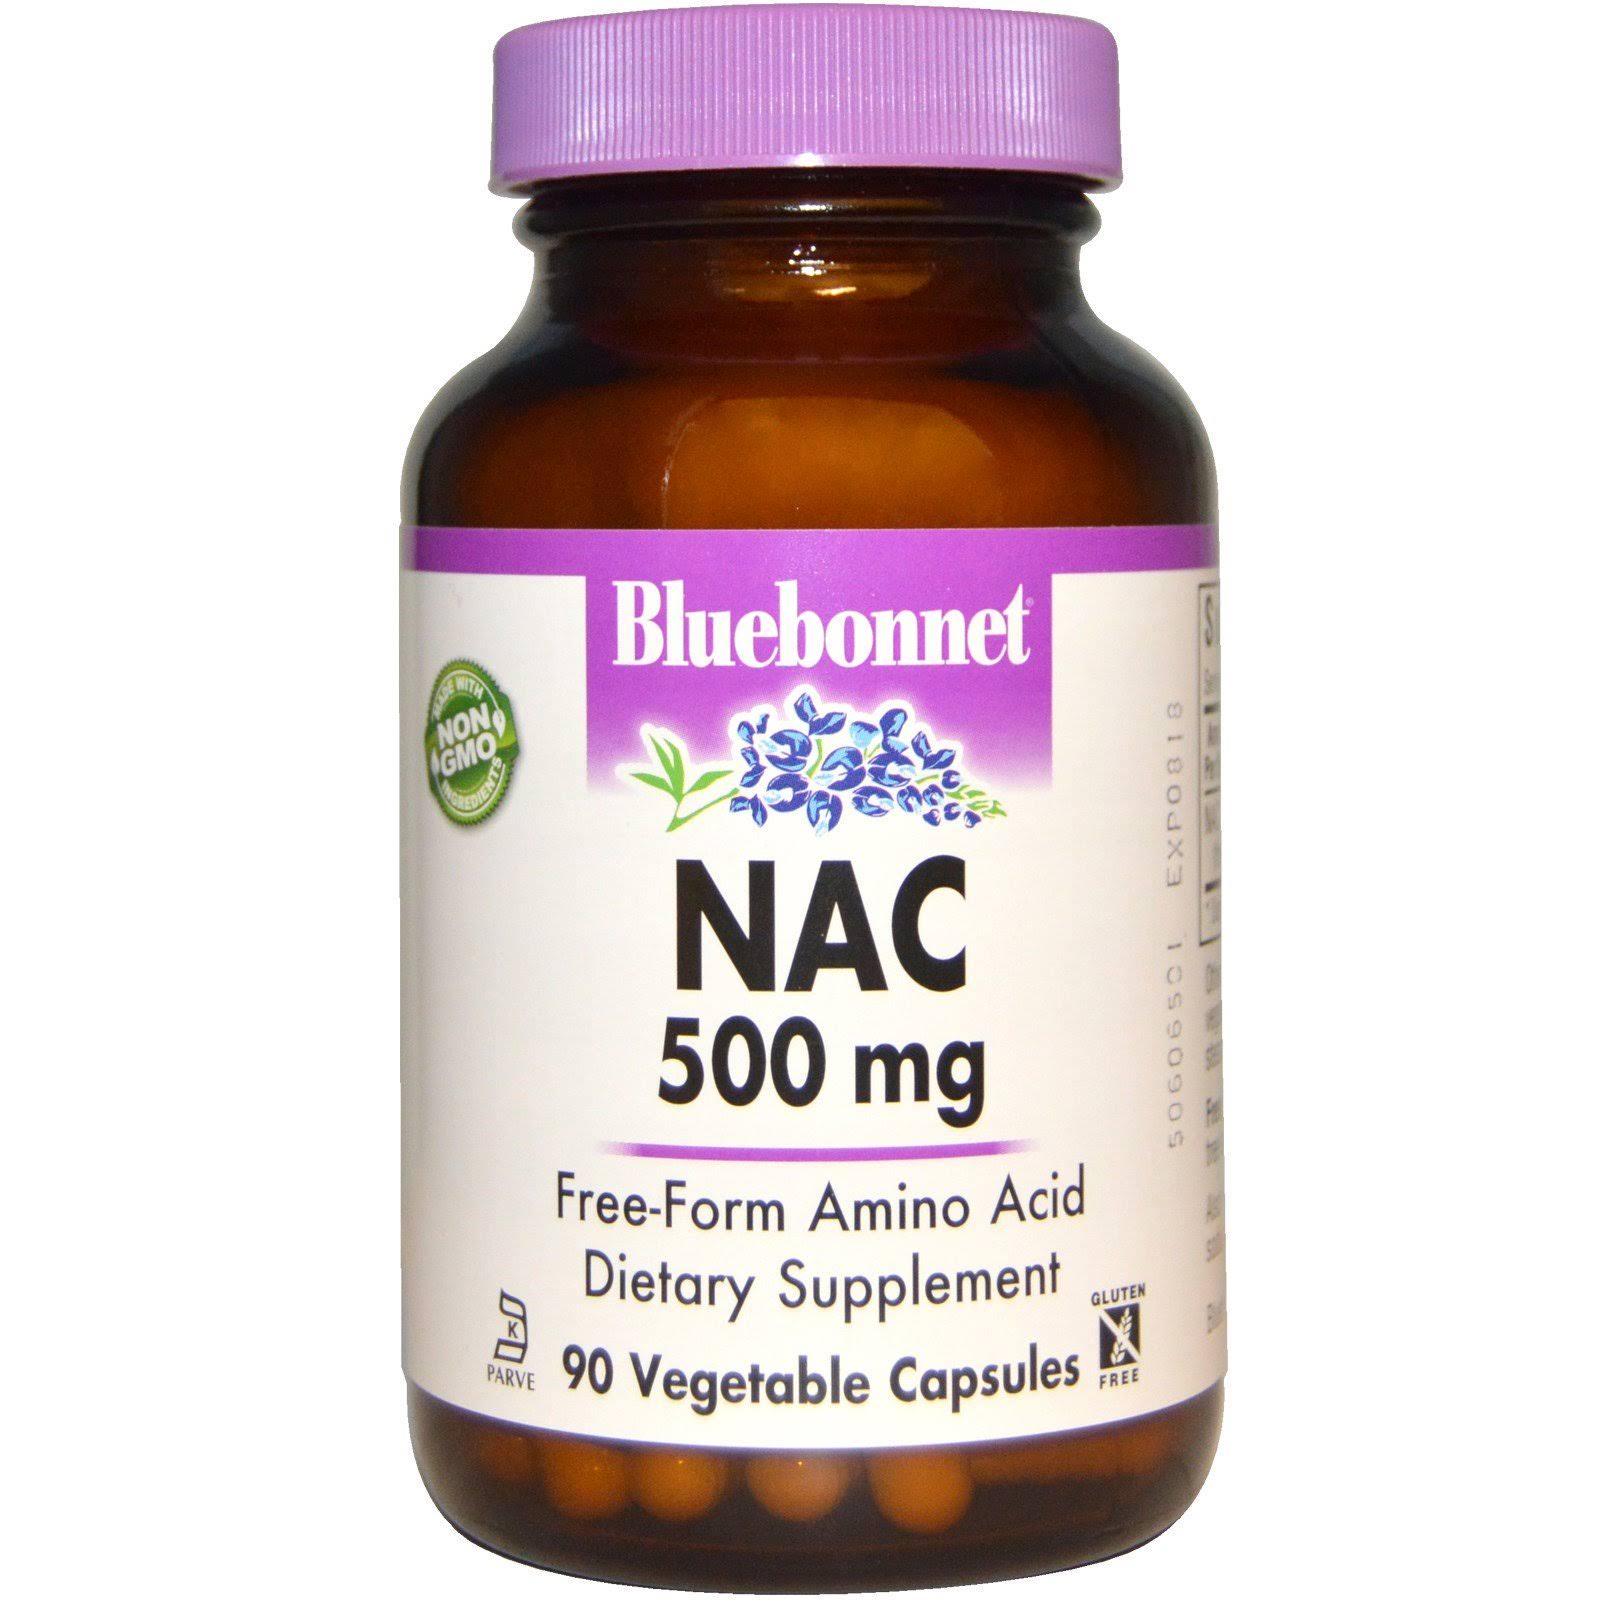 Bluebonnet NAC Vitamin Capsules - 90ct, 500mg